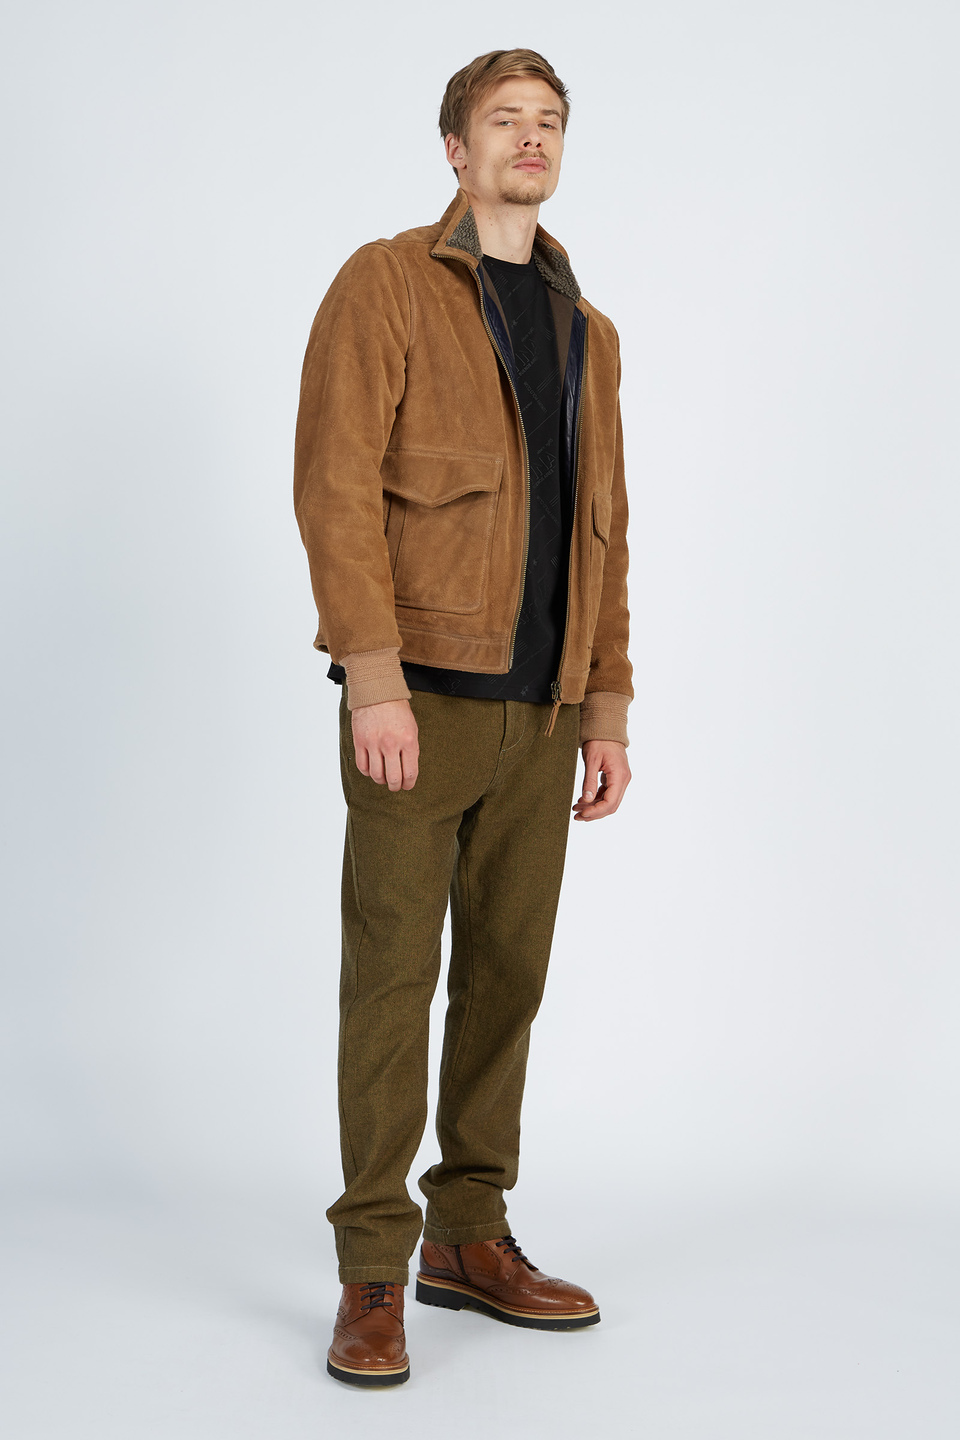 Men’s leather jacket with front regular fit zip closure | La Martina - Official Online Shop